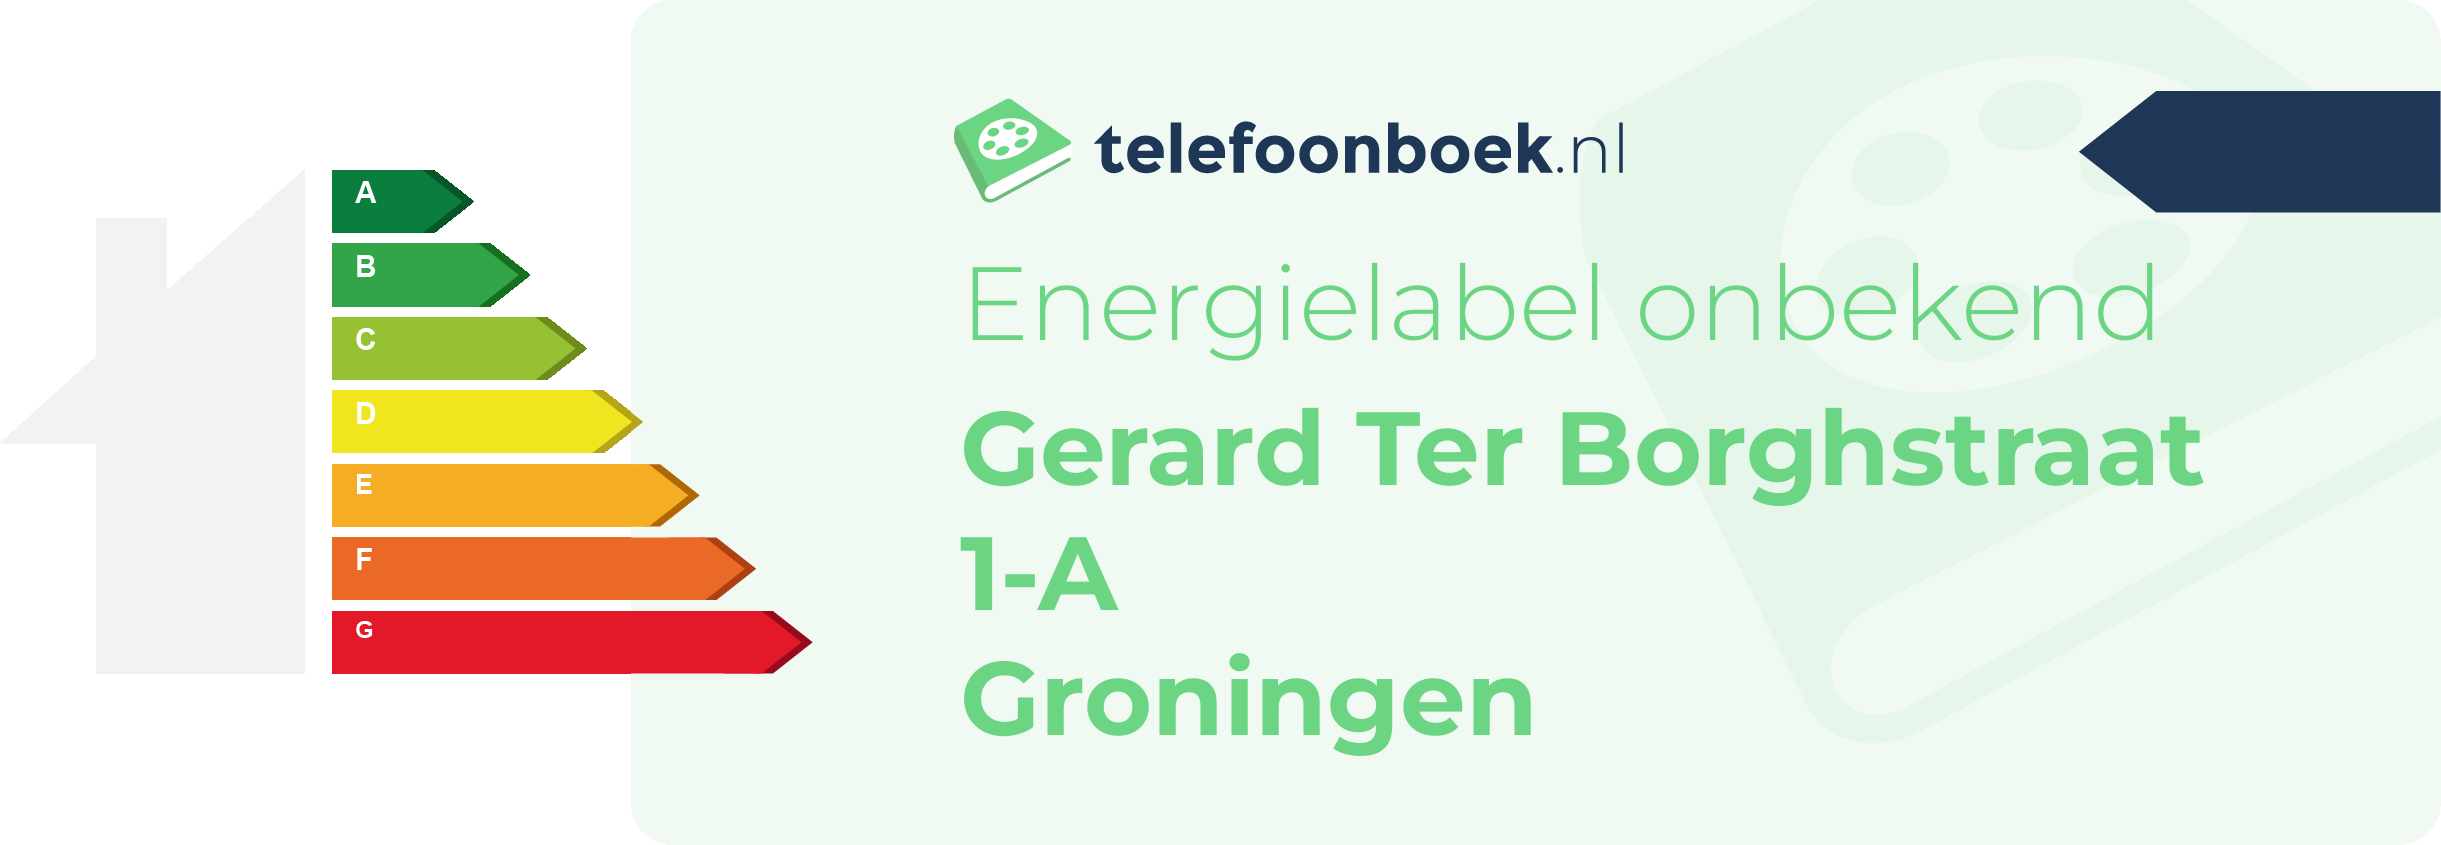 Energielabel Gerard Ter Borghstraat 1-A Groningen